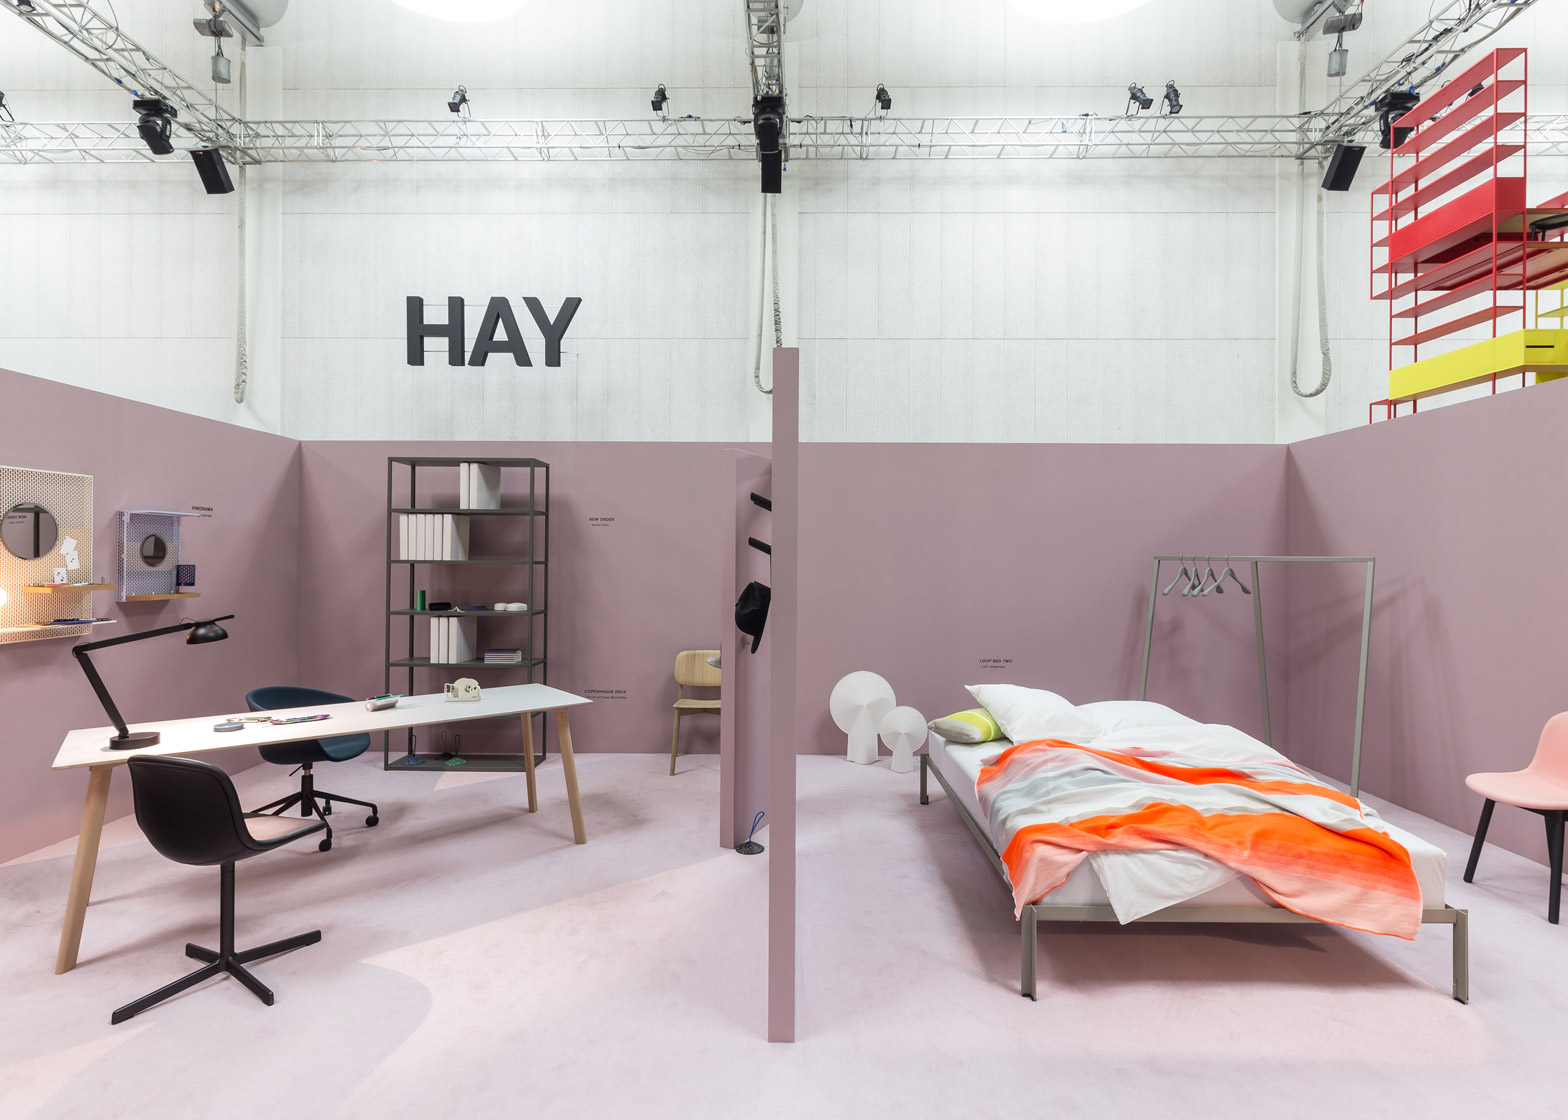 hay-exhibition-milan-design-week-2016_